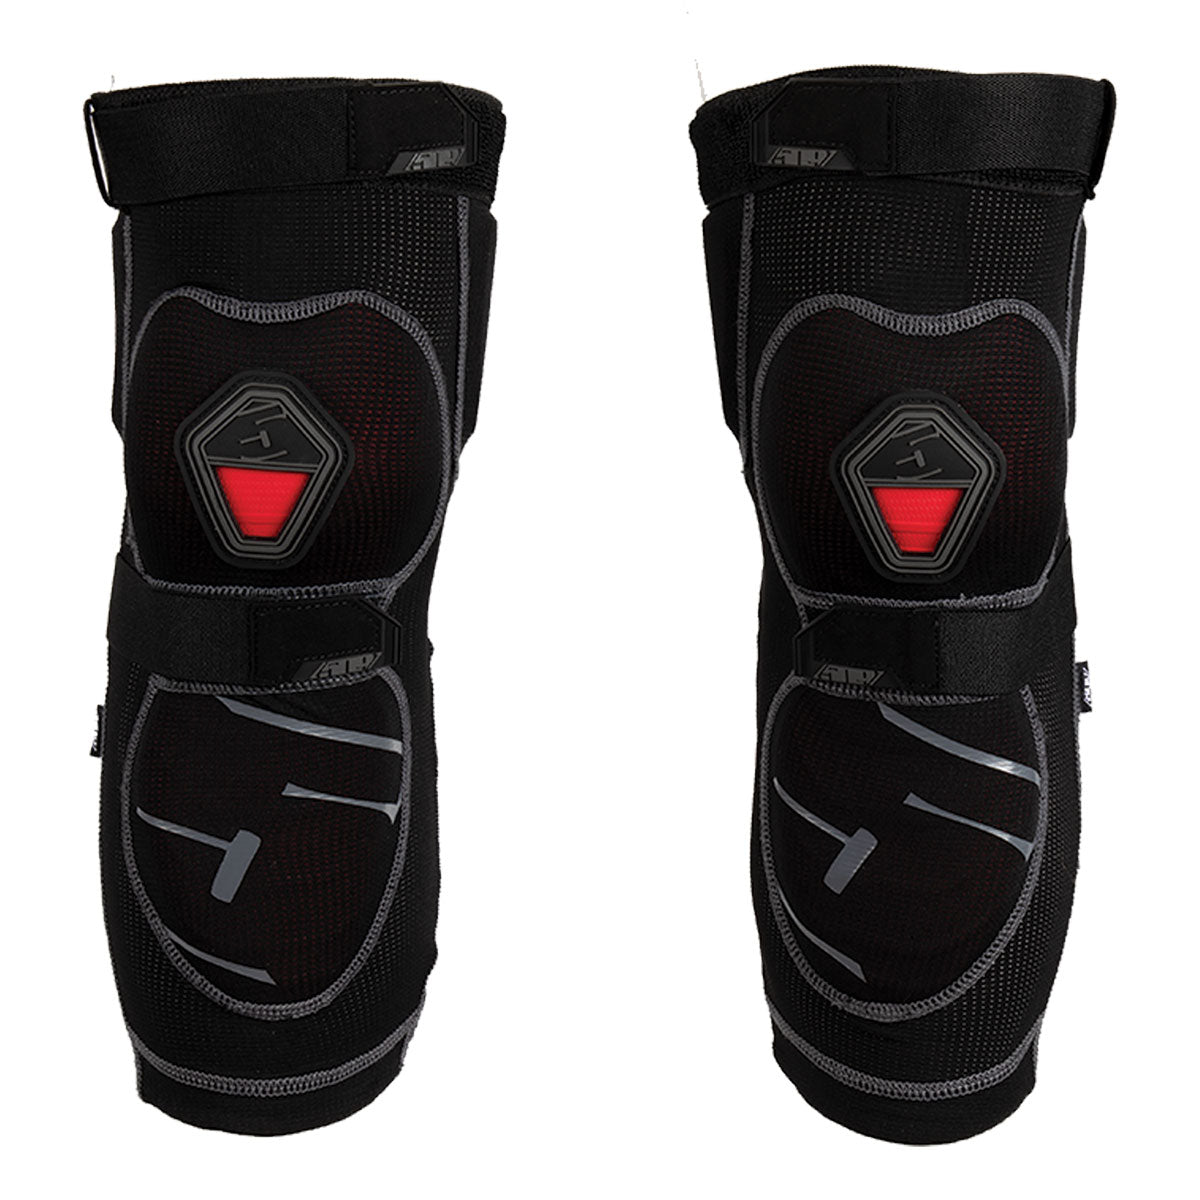 509 R - Mor Protective Knee Pad F12000400-120-001